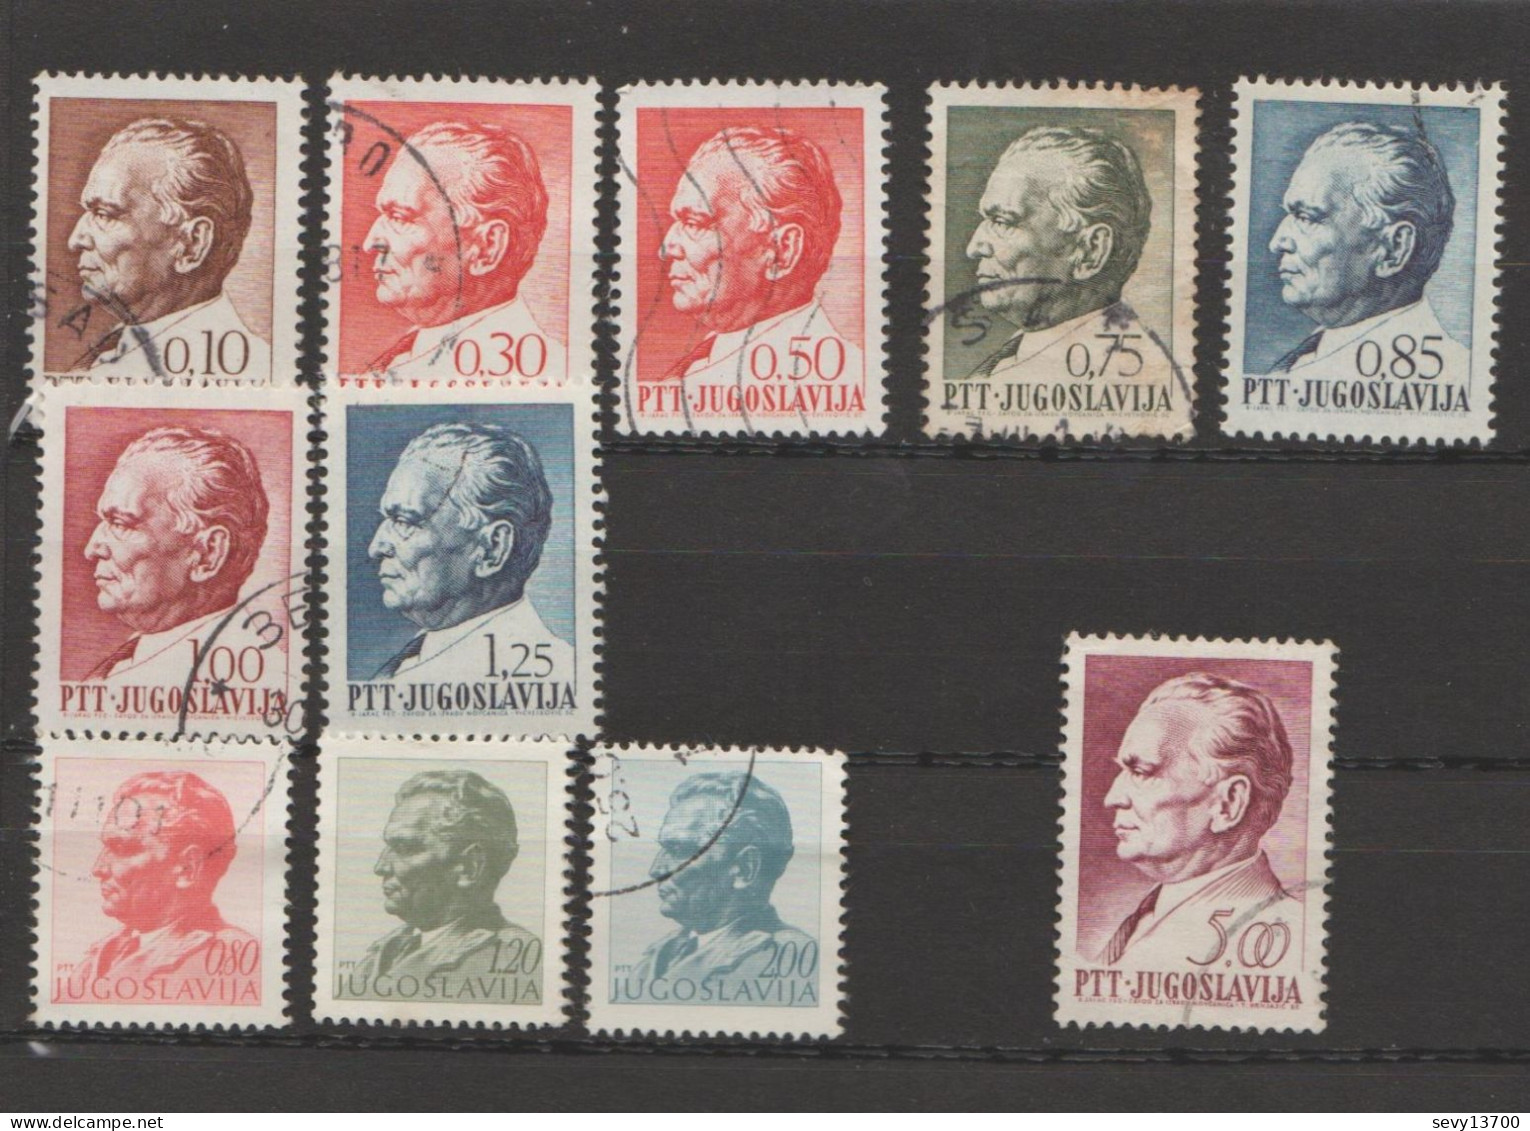 Yougoslavie - Lot 12 Timbres Tito - Mi 1207 - 1210 - 1283 - 1285 - 1214 - 1215 - 1287 - 1552 - 1553 - 1554 - 1246 - 454 - Used Stamps